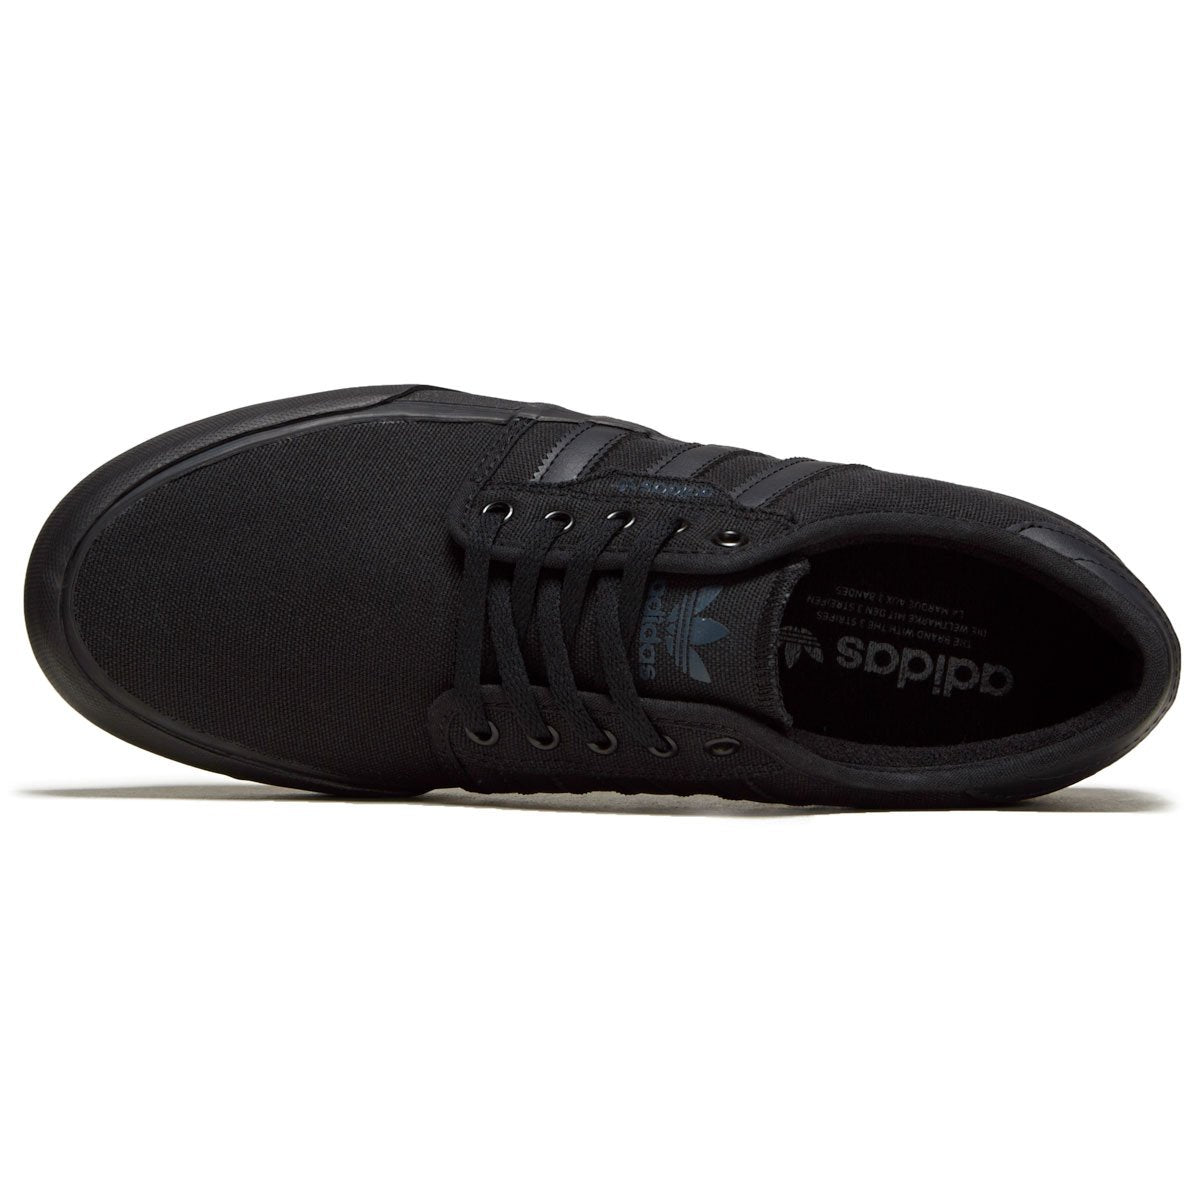 Adidas Seeley Xt Shoes - Black/Black/Black image 3